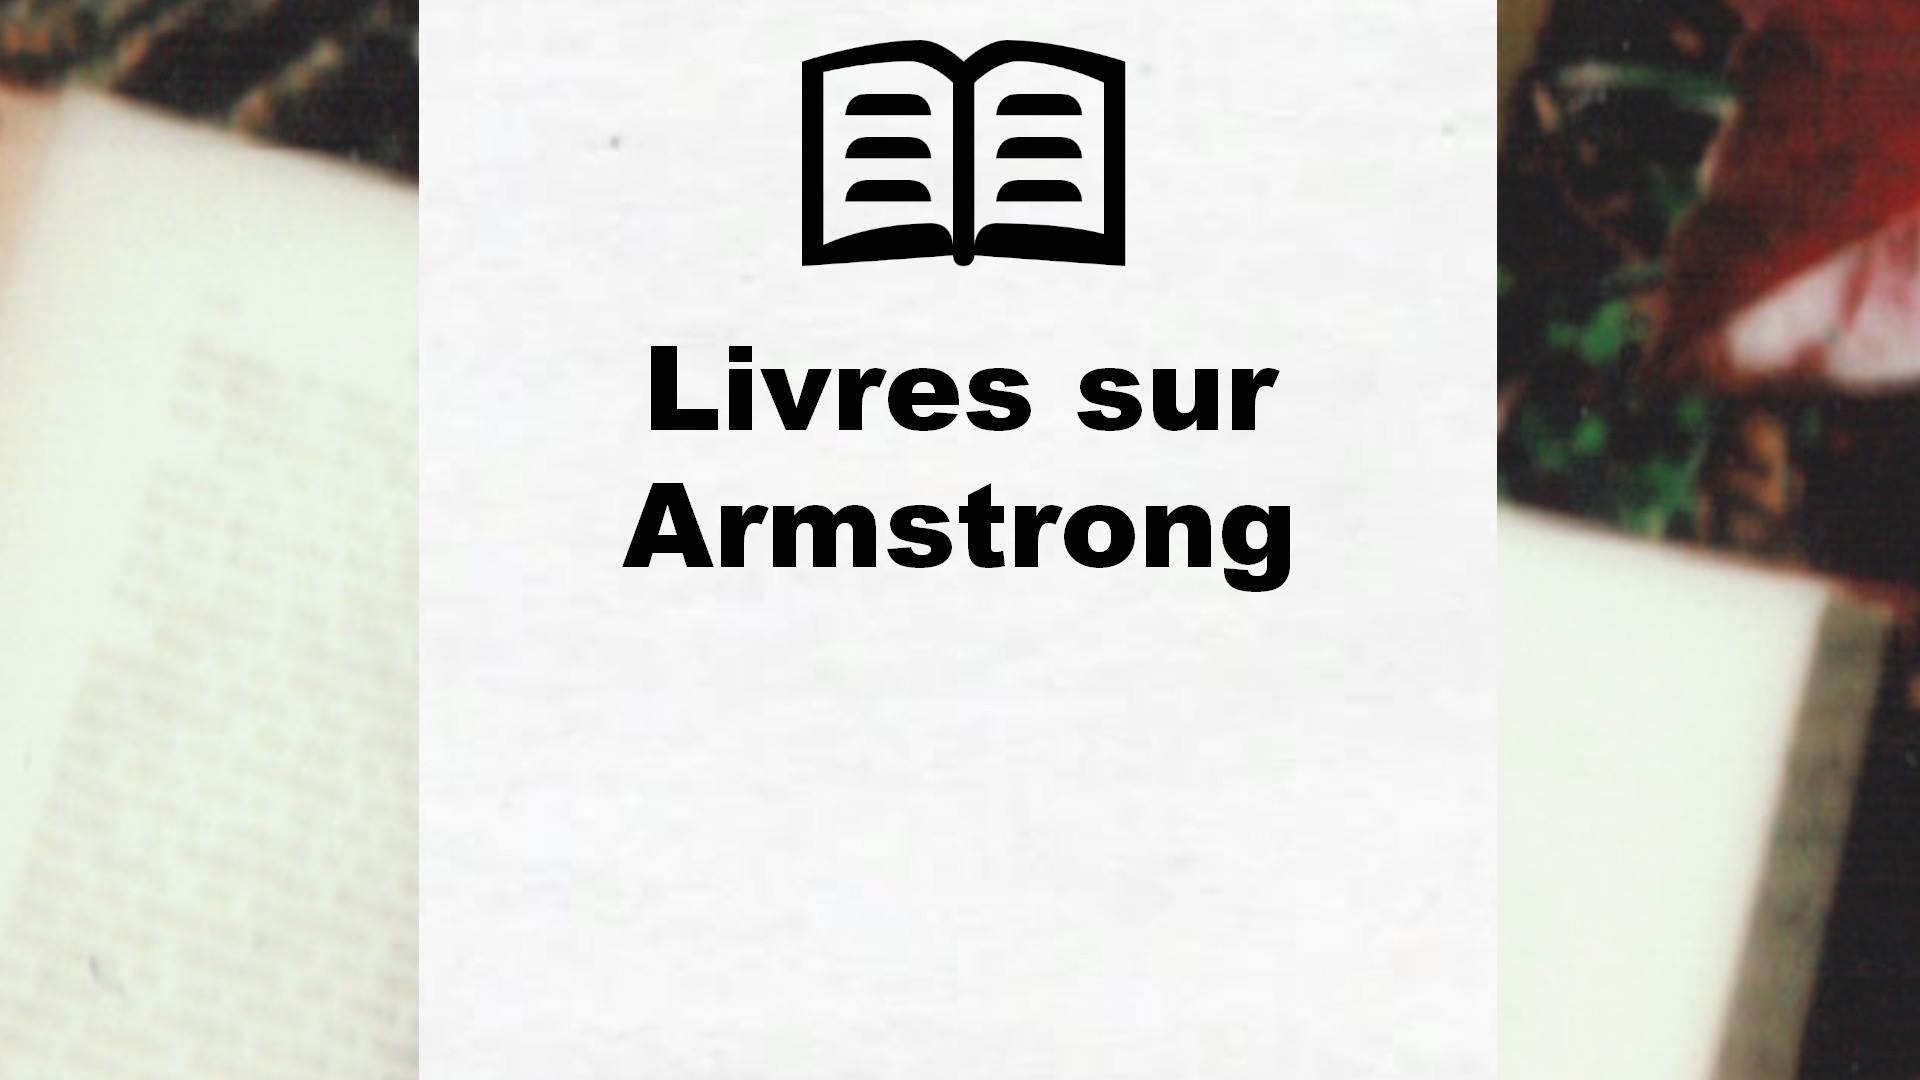 Livres sur Armstrong